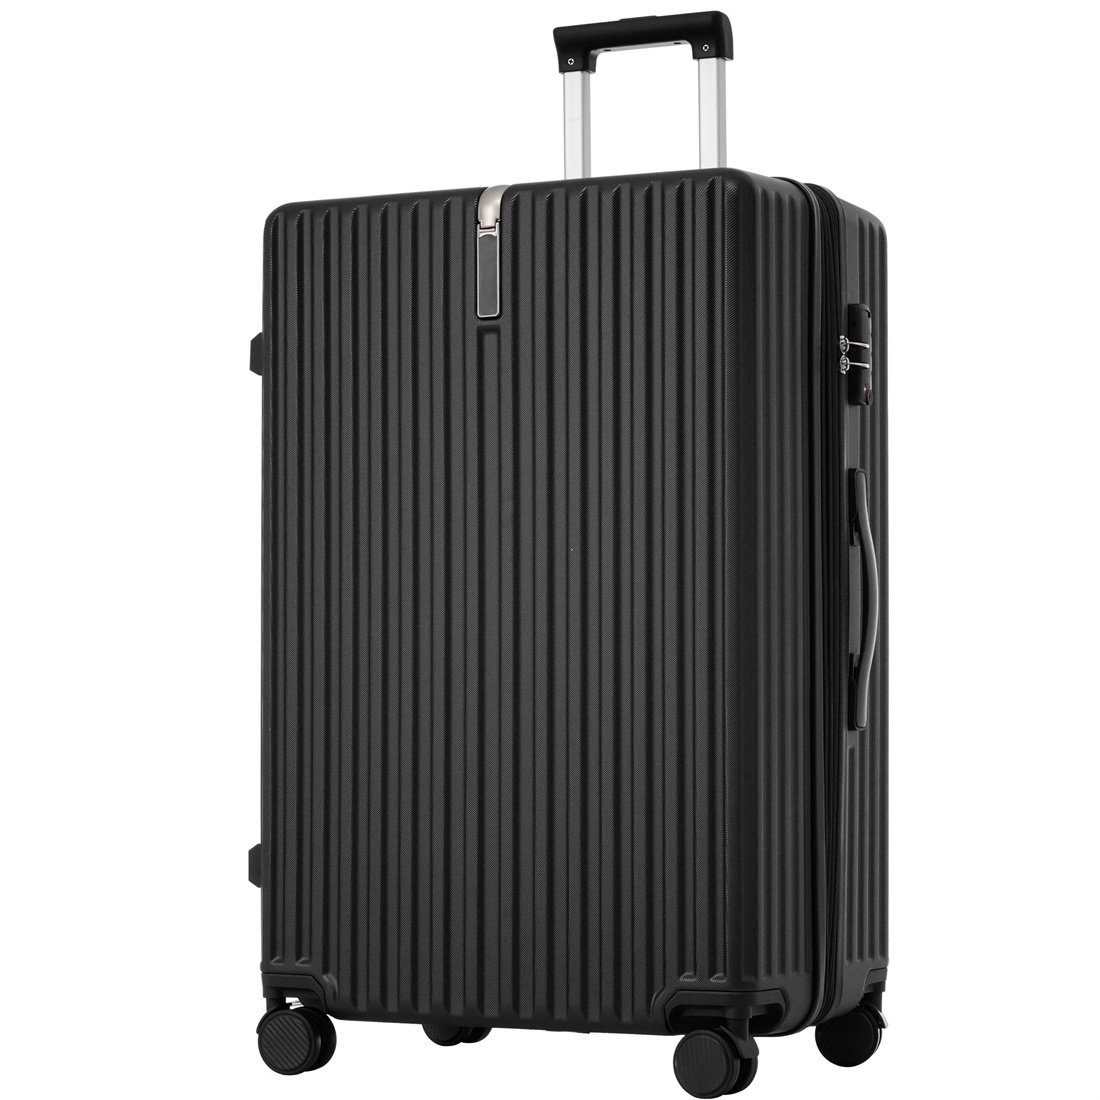 DÖRÖY Koffer Hartschalen-Koffer,Rollkoffer,Reisekoffer,65*43*28cm, schwarz